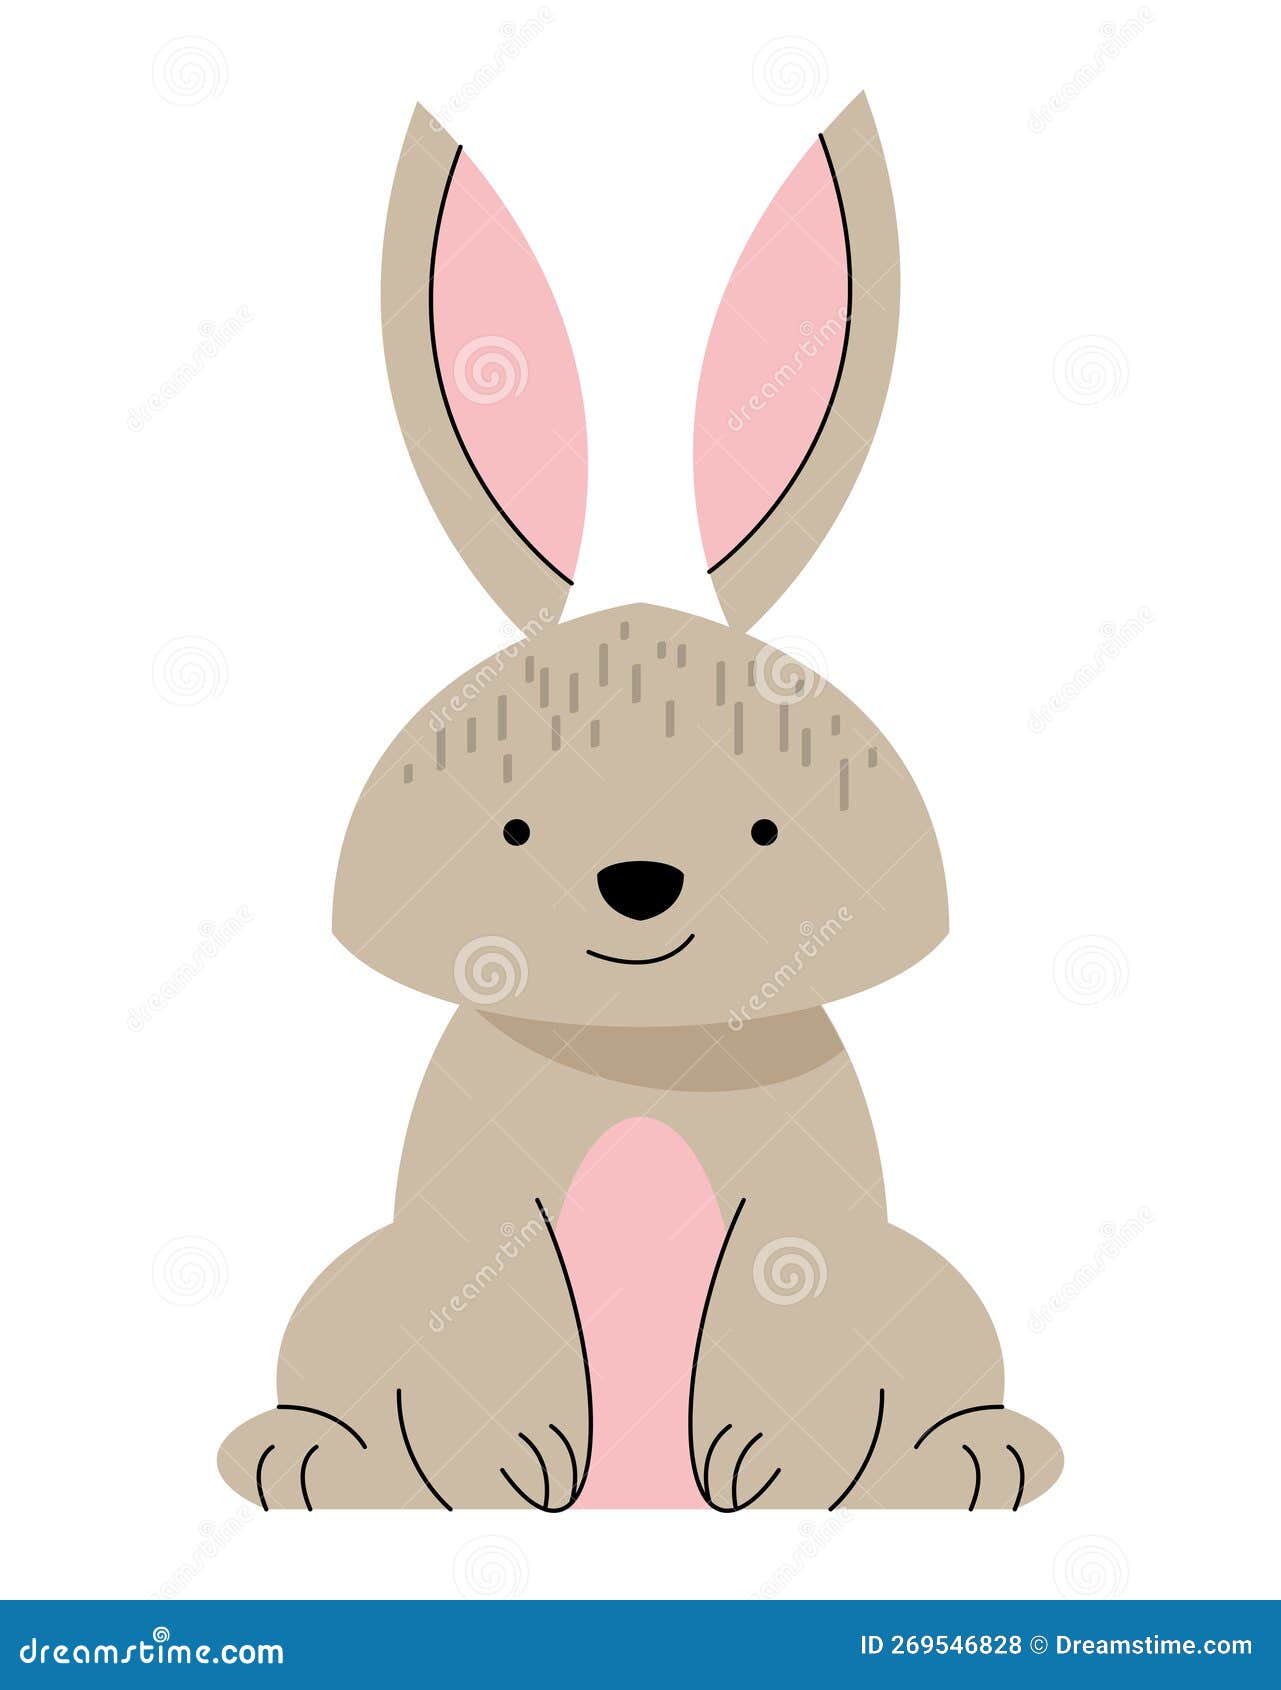 https://thumbs.dreamstime.com/z/cute-beige-rabbit-seated-character-269546828.jpg